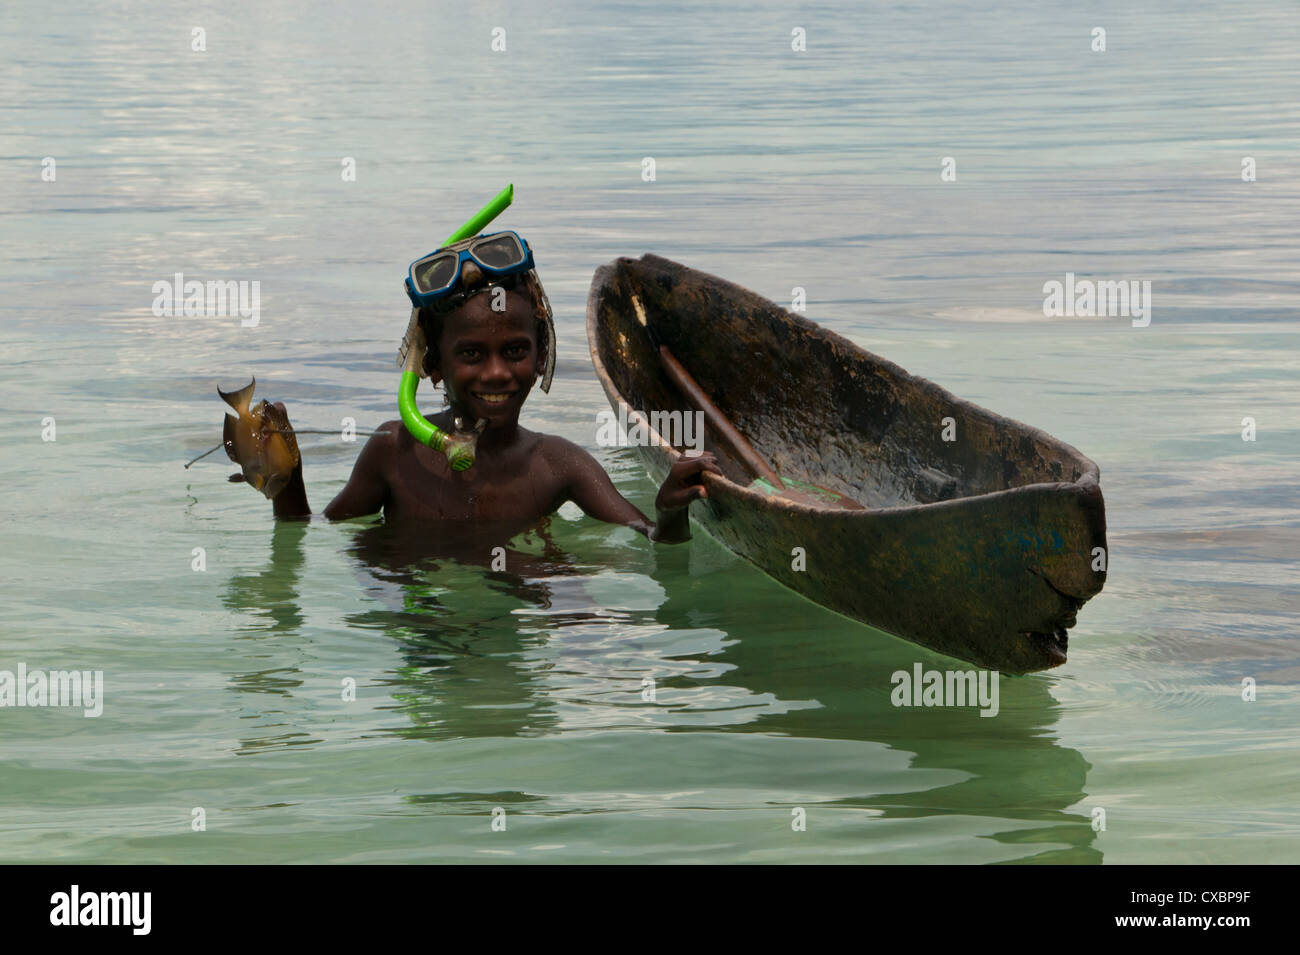 Pesca de arpón fotografías e imágenes de alta resolución - Alamy